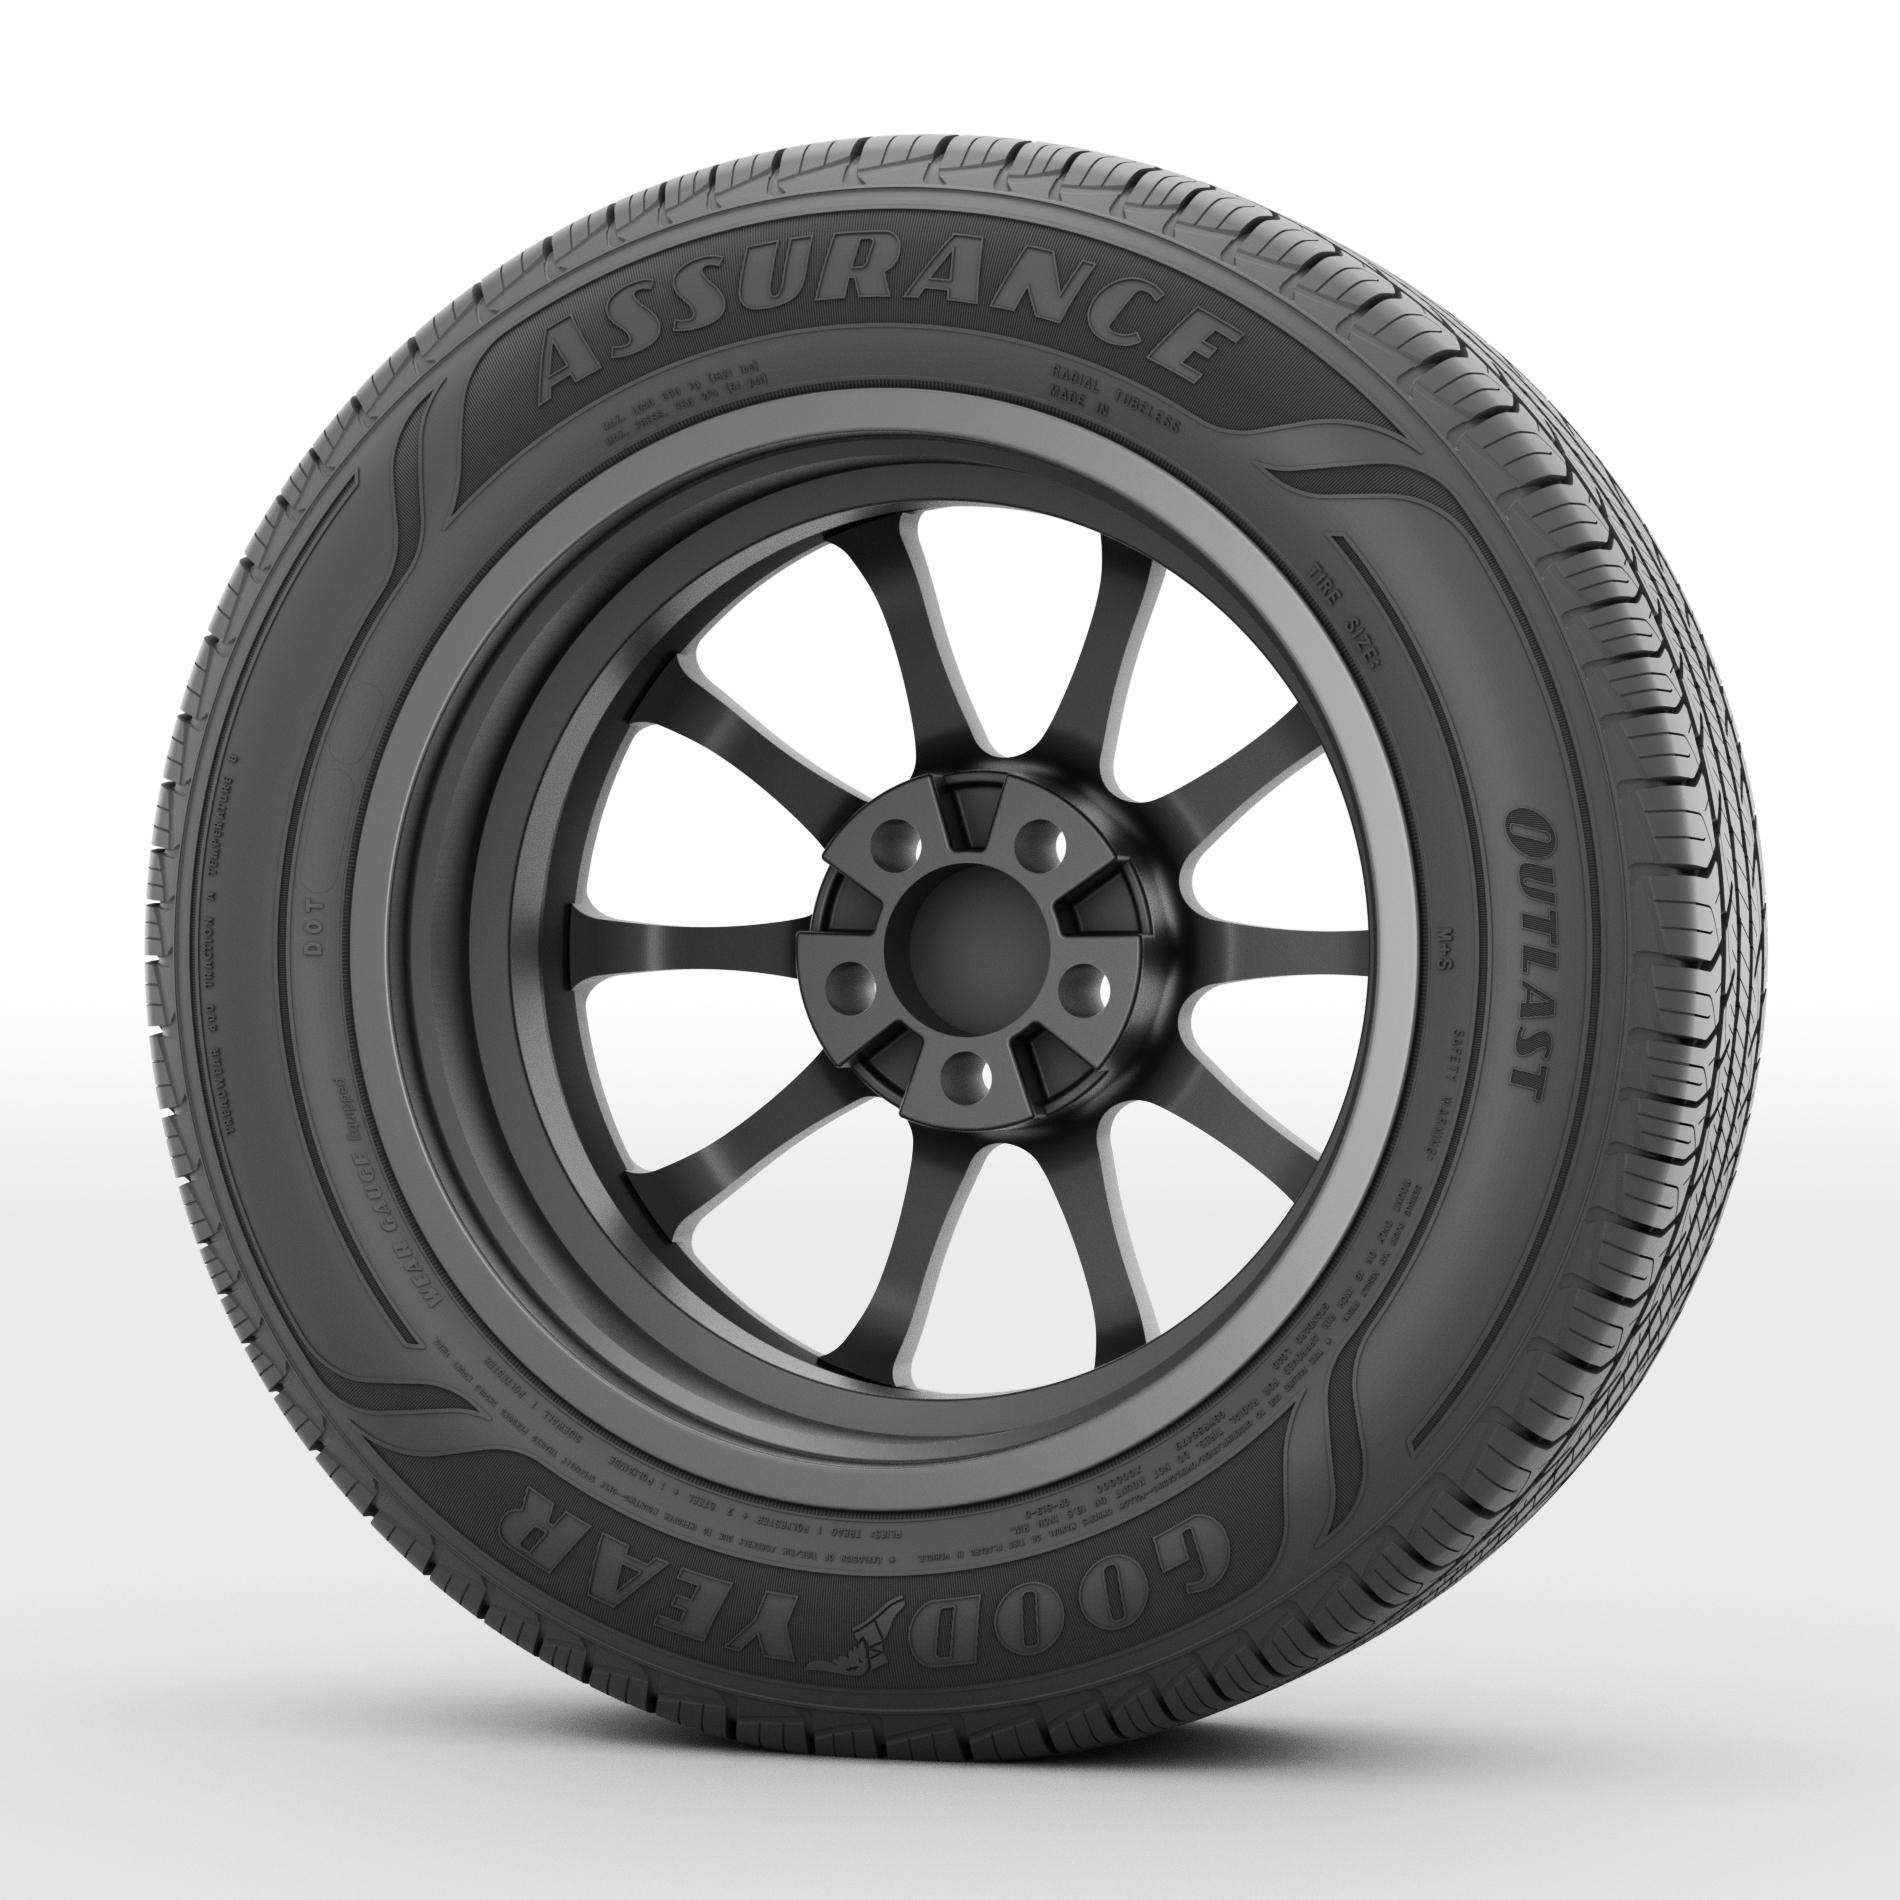 Goodyear Assurance Outlast 215/60R16 Tire All-Season 95V